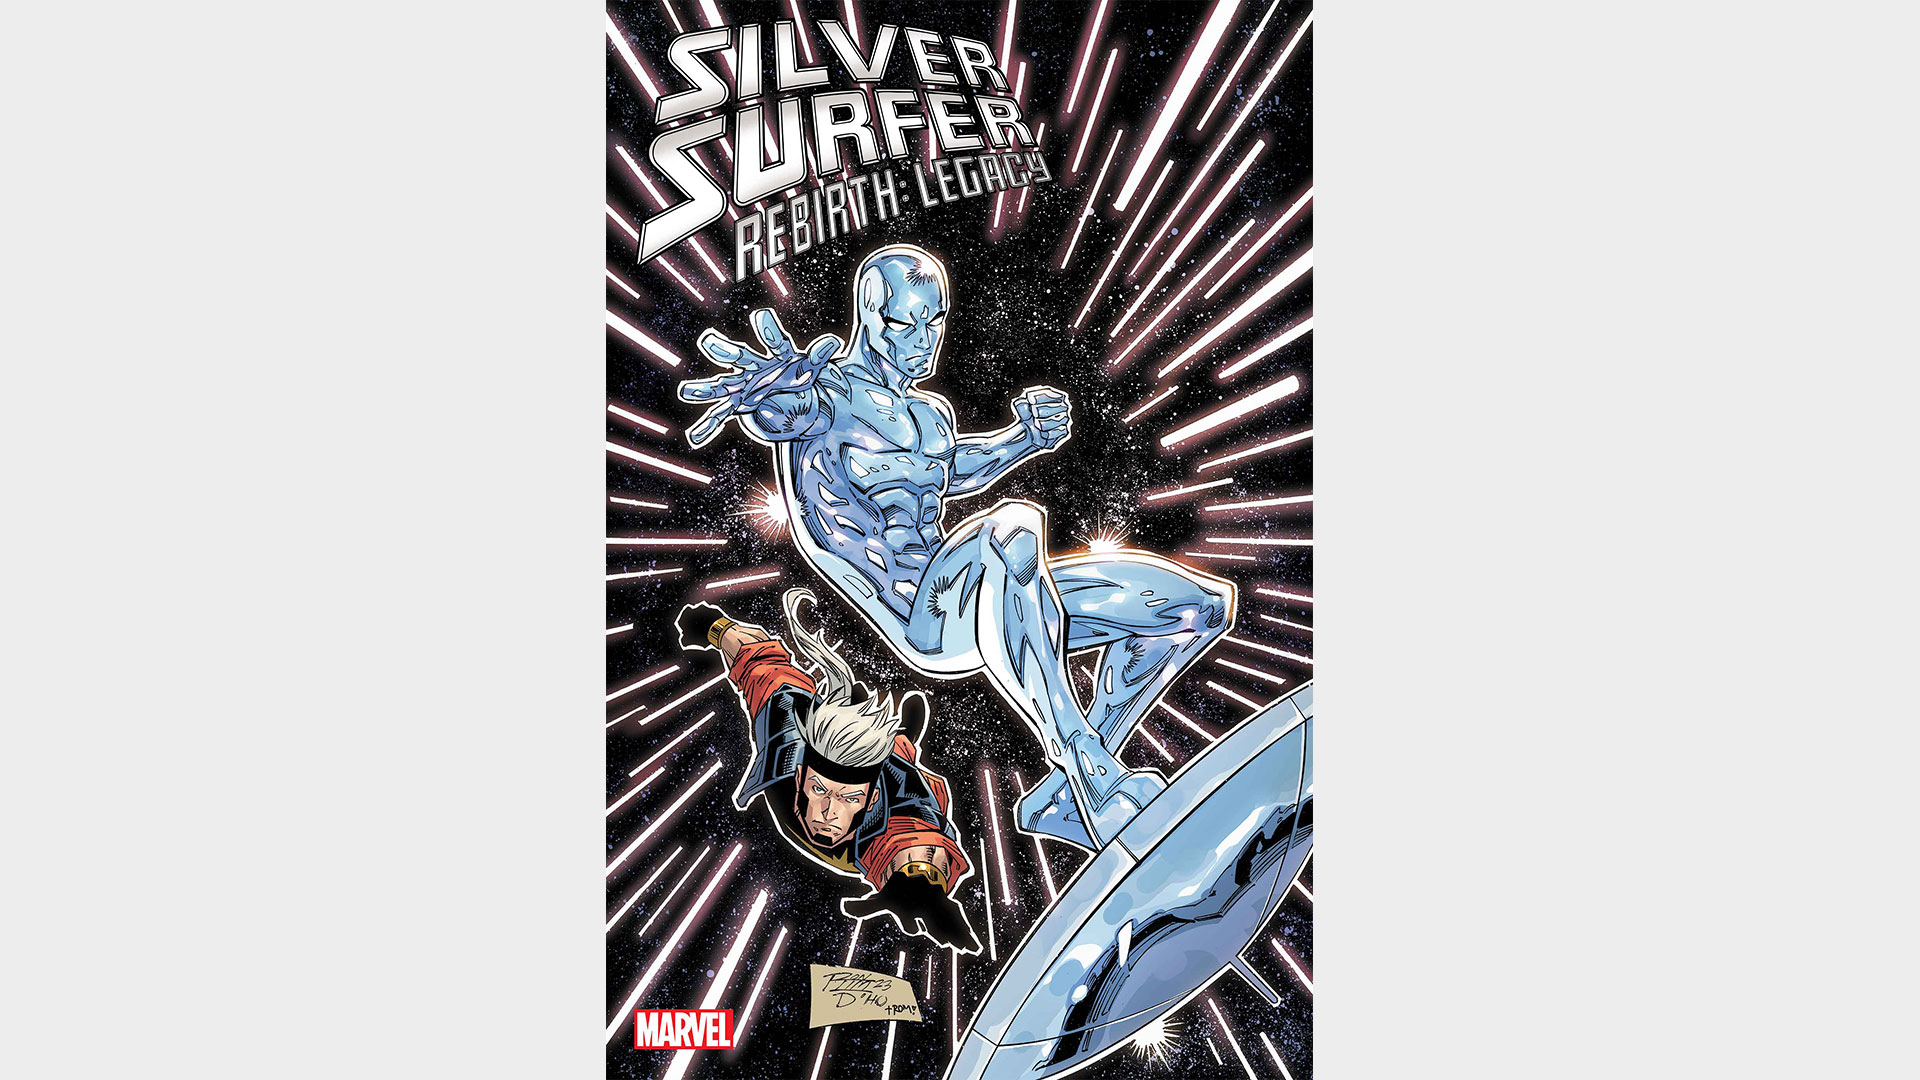 Couverture de Silver Surfer Rebirth Legacy #1